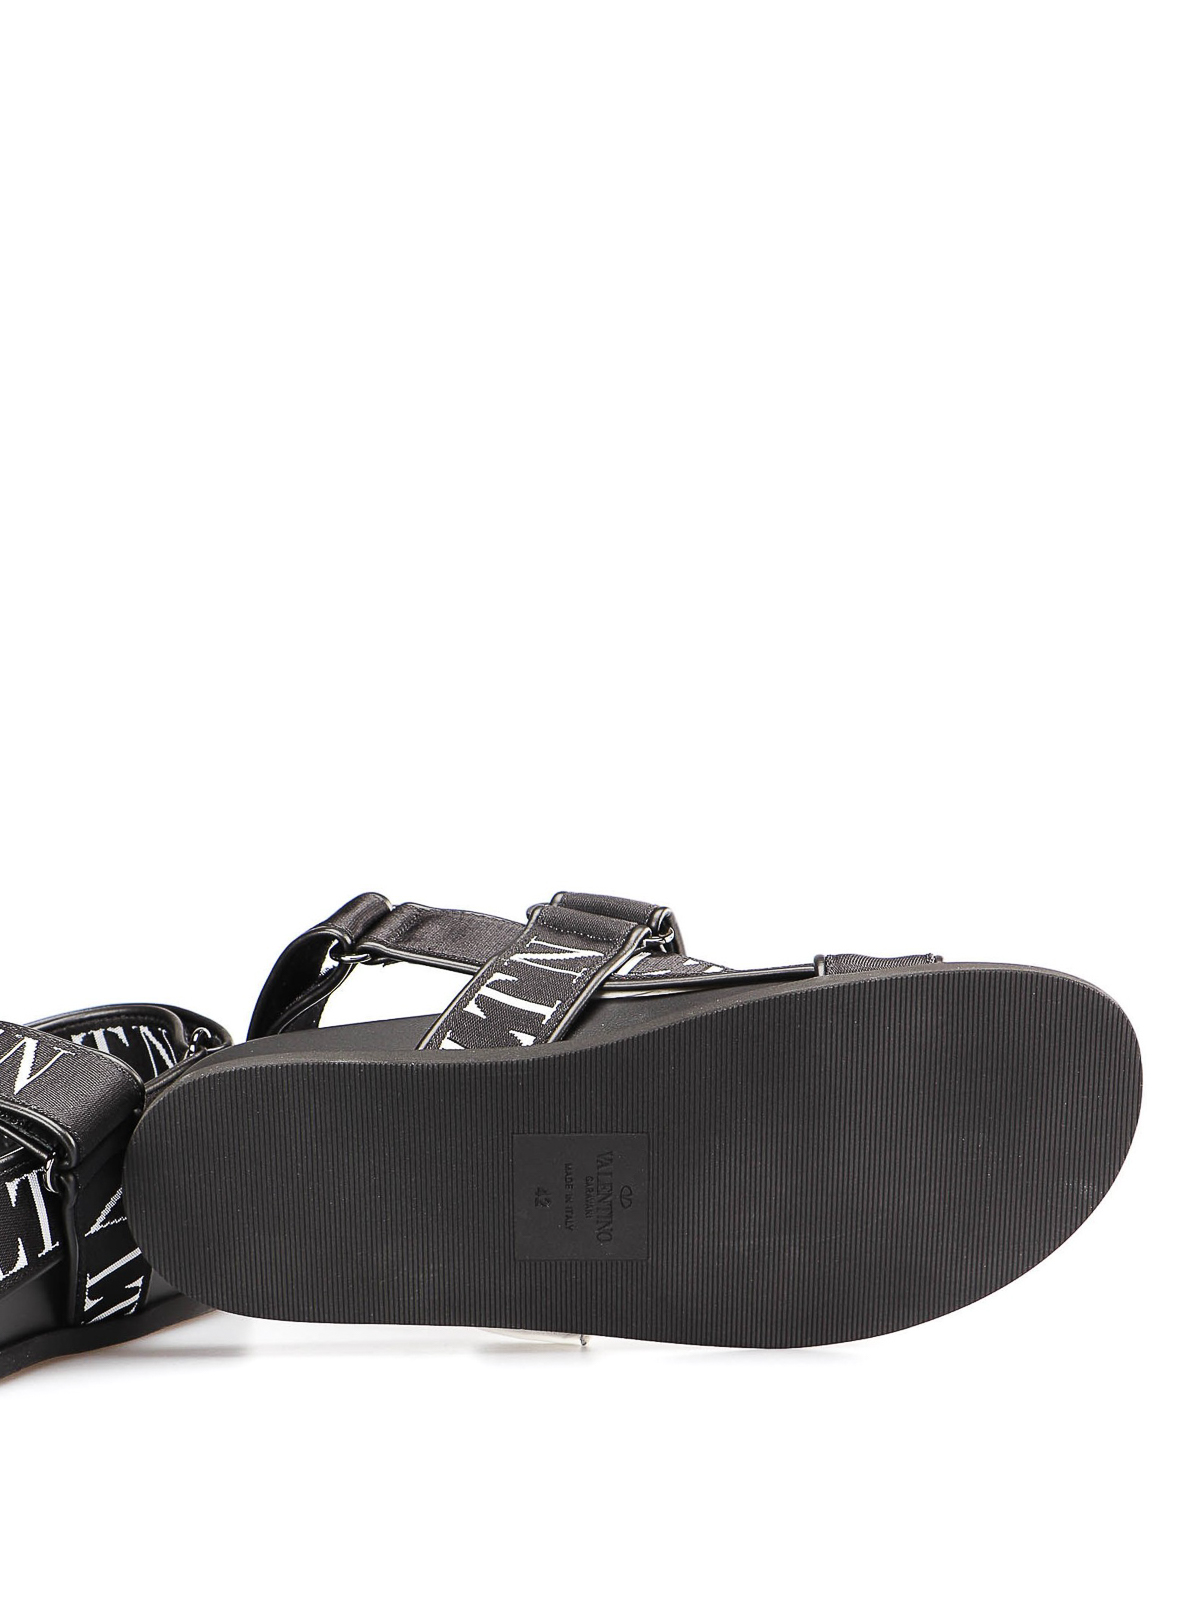 par Dekan ting Sandals Valentino Garavani - VLTN black leather and fabric sandals -  RY0S0B91ANG0NI